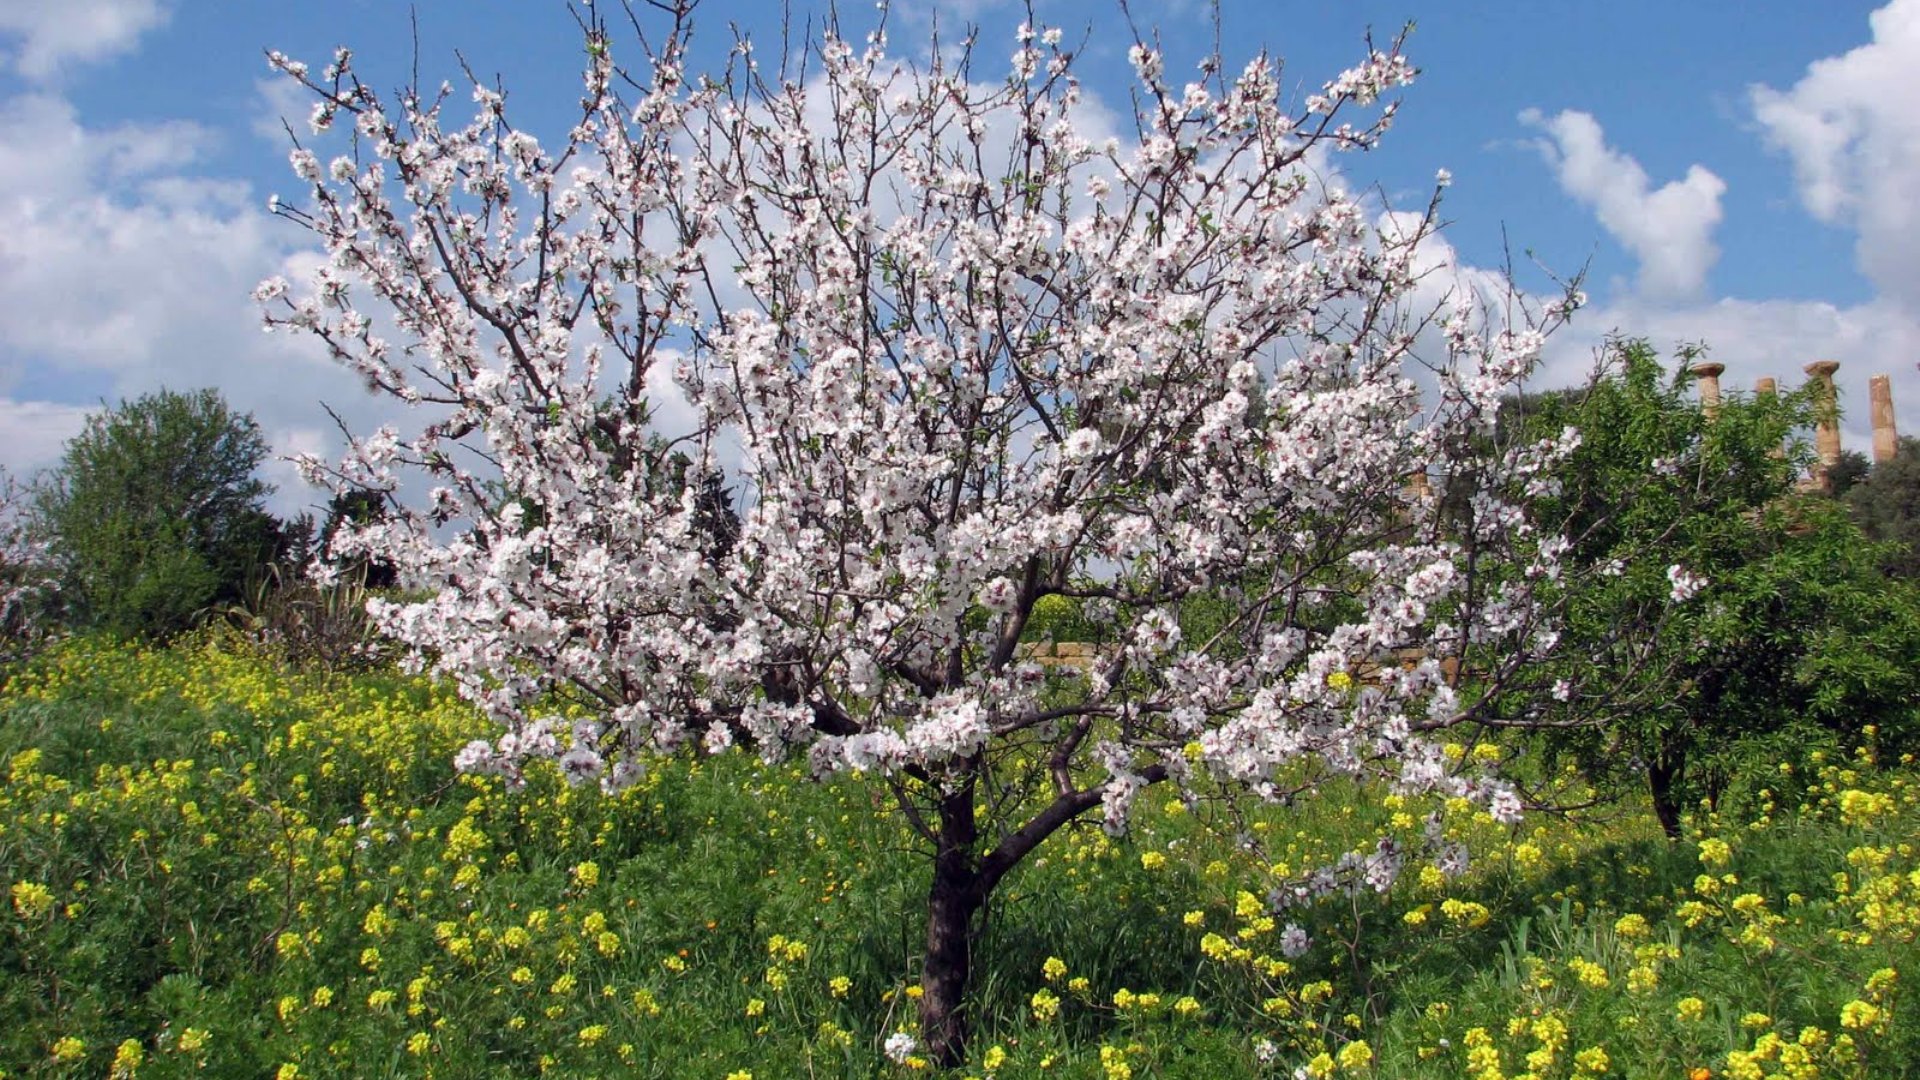 6 FRESH TREE CUTTINGS Bitter Almond Prunus Dulcis  Ideal Rootstock for Grafting